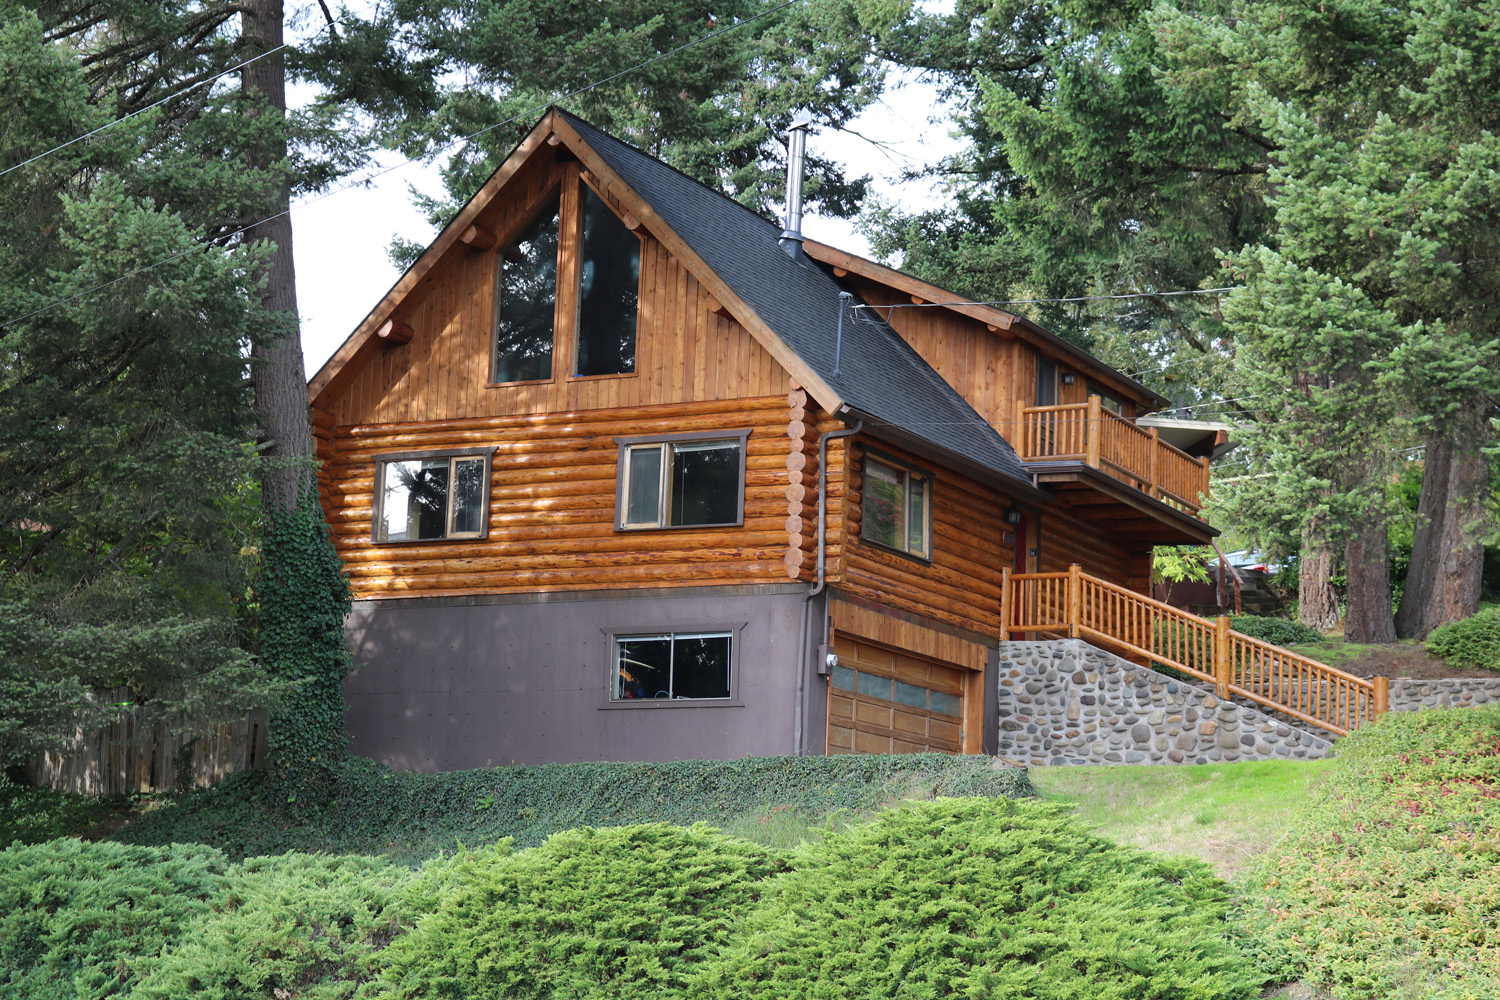 Oregon Log Home Repair By Restoration Solutions LLC 504 S 8th St, Cottage Grove Oregon 97424